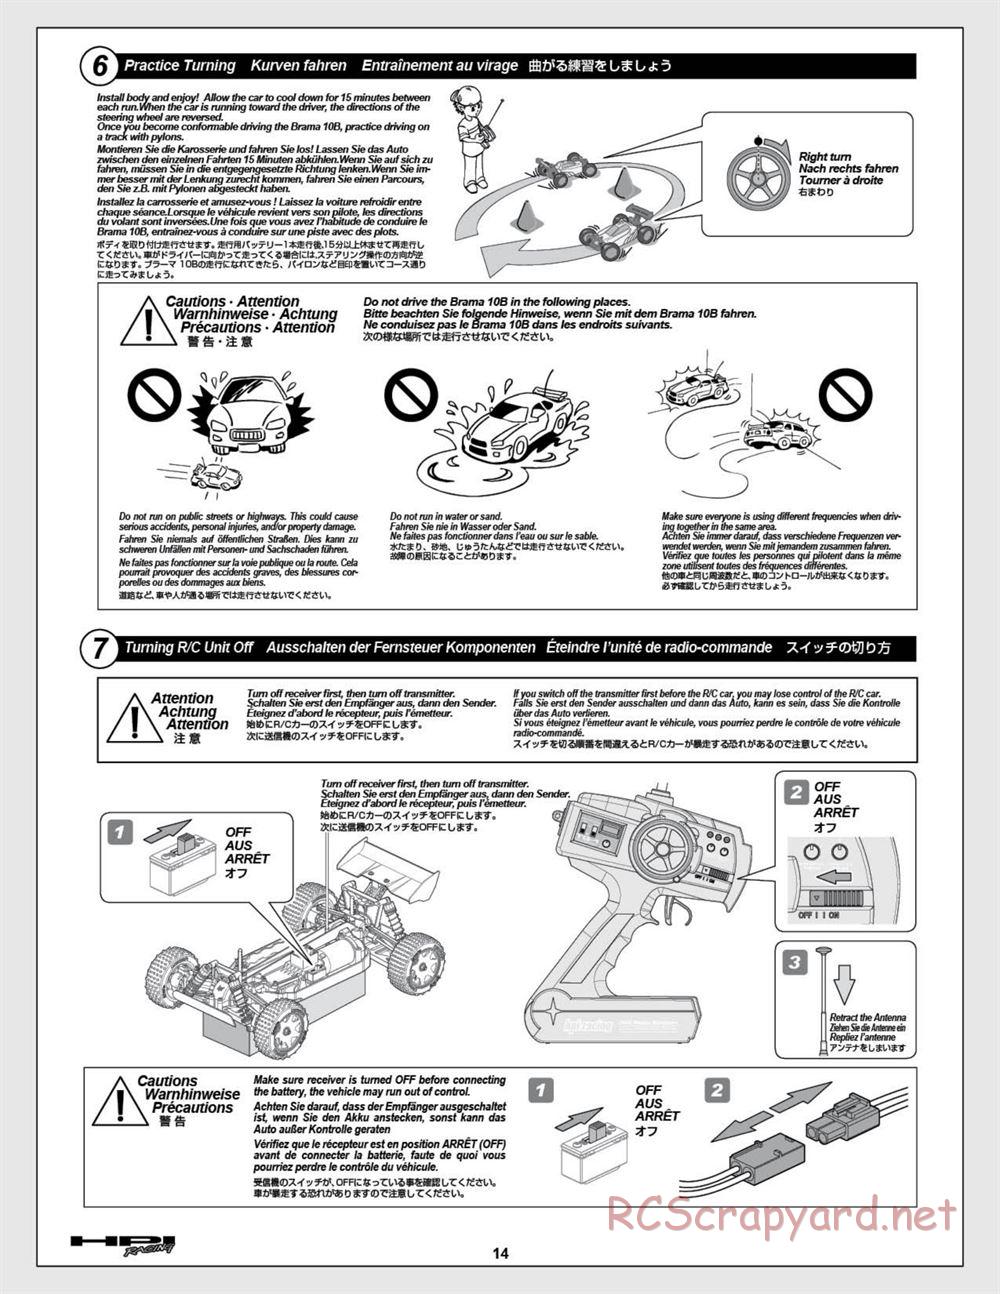 HPI - Brama 10B - Manual - Page 14